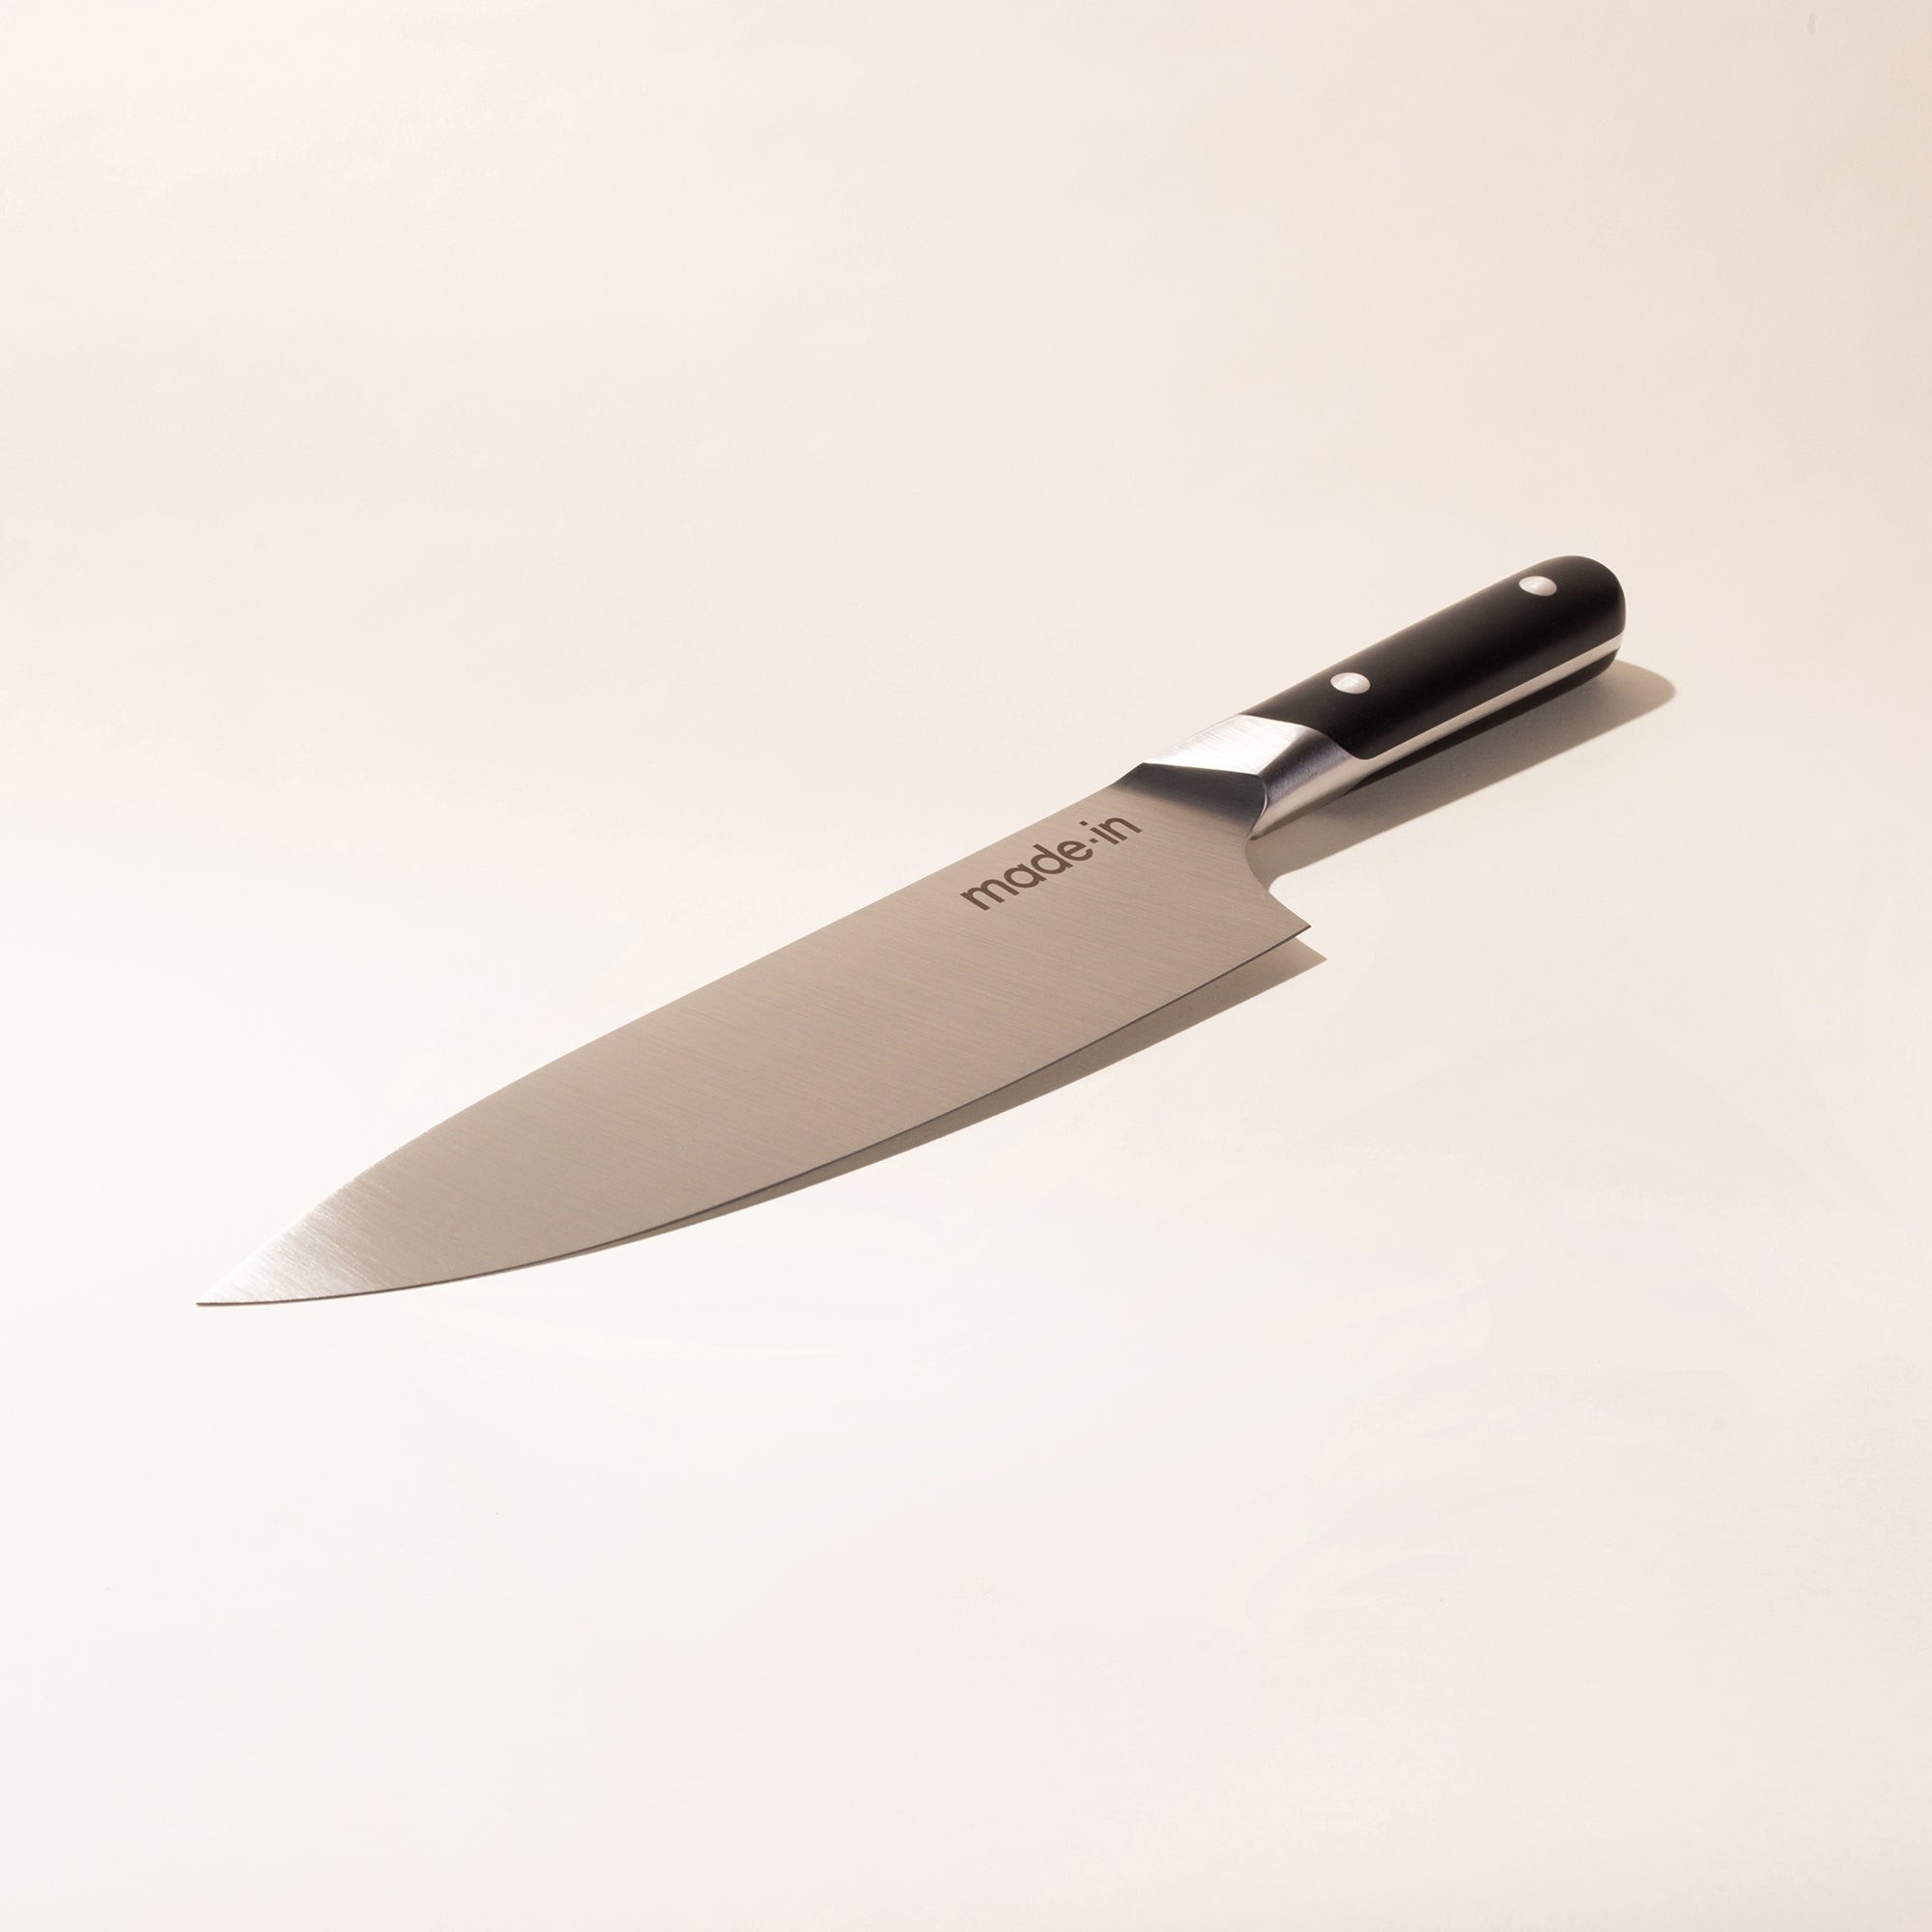 8" French Chef's Knife, Truffle Black